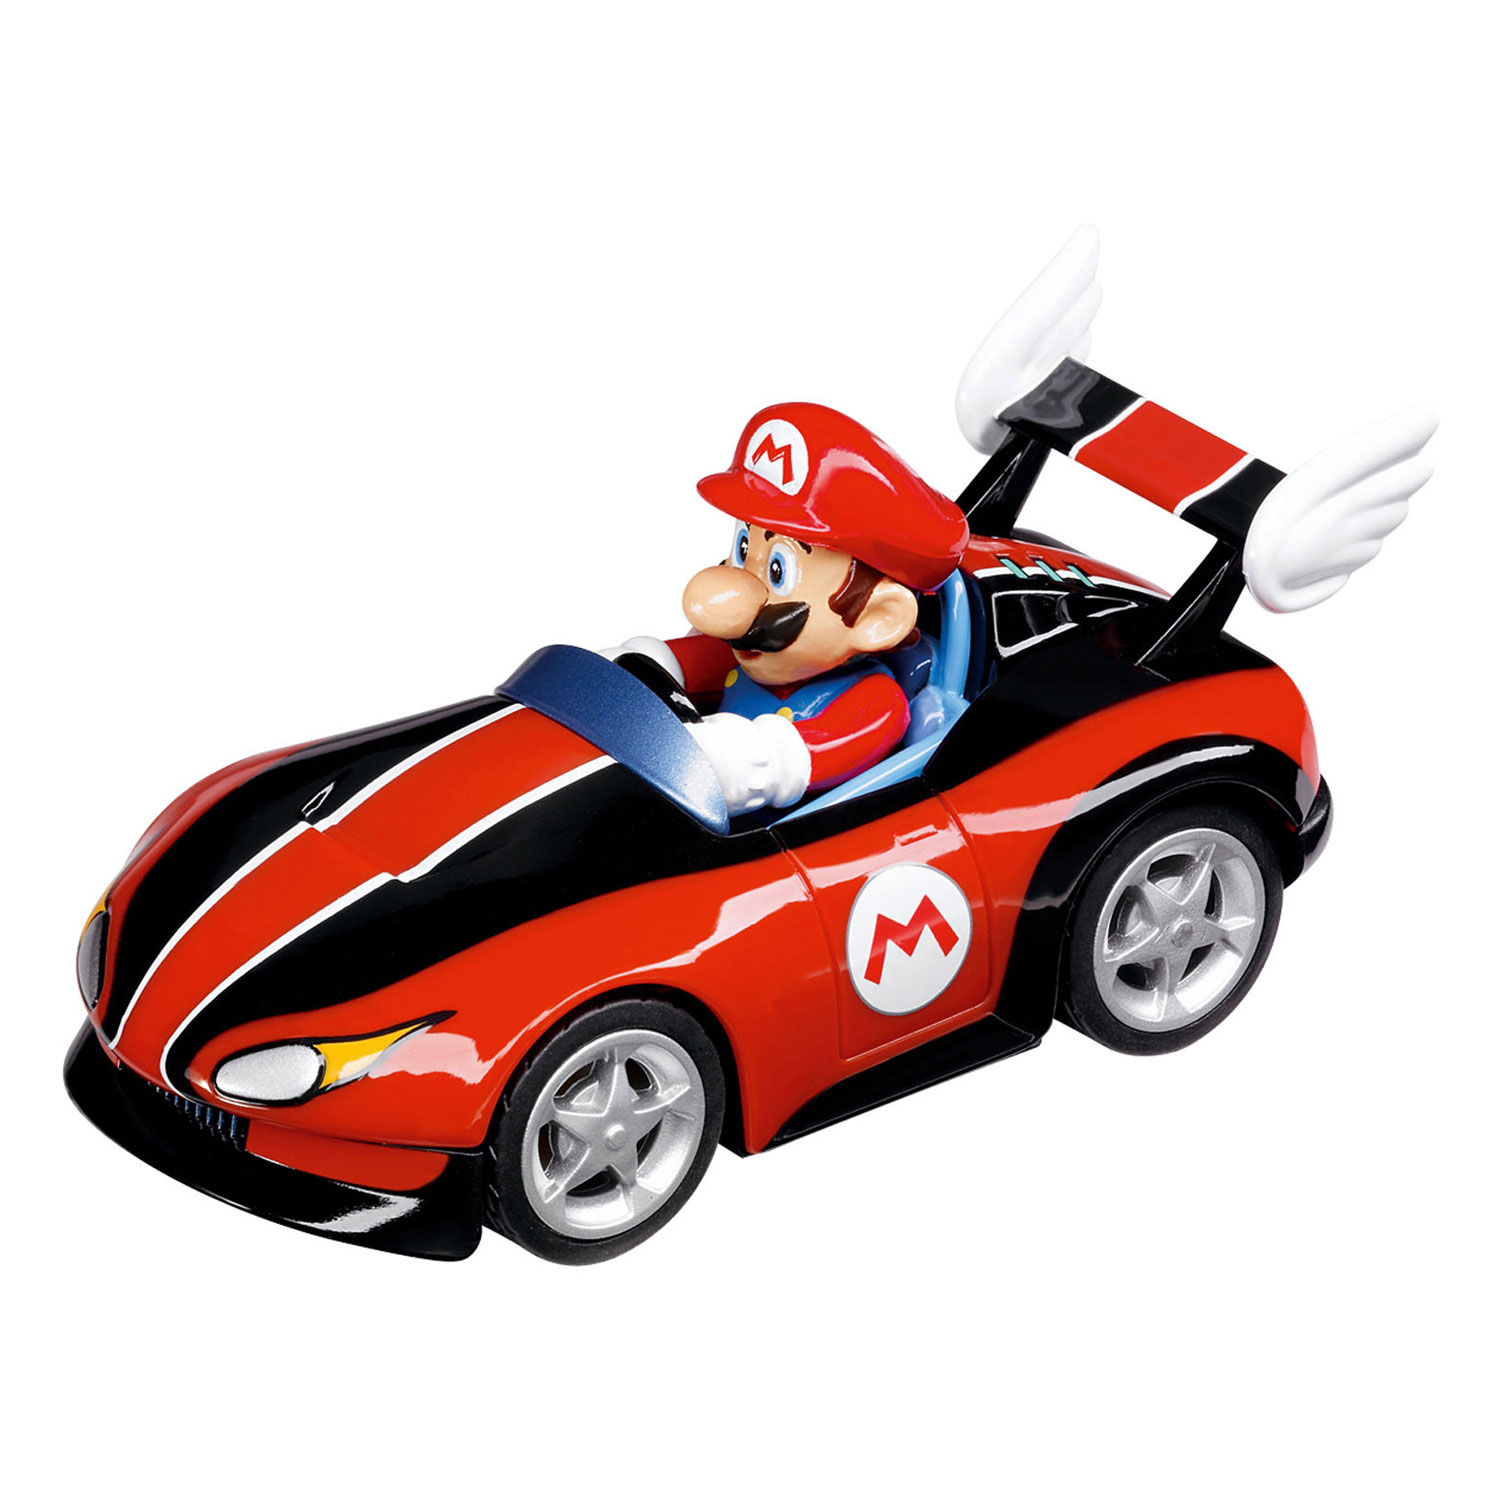 Super Mario Pull back Race Cars, 3 pcs.